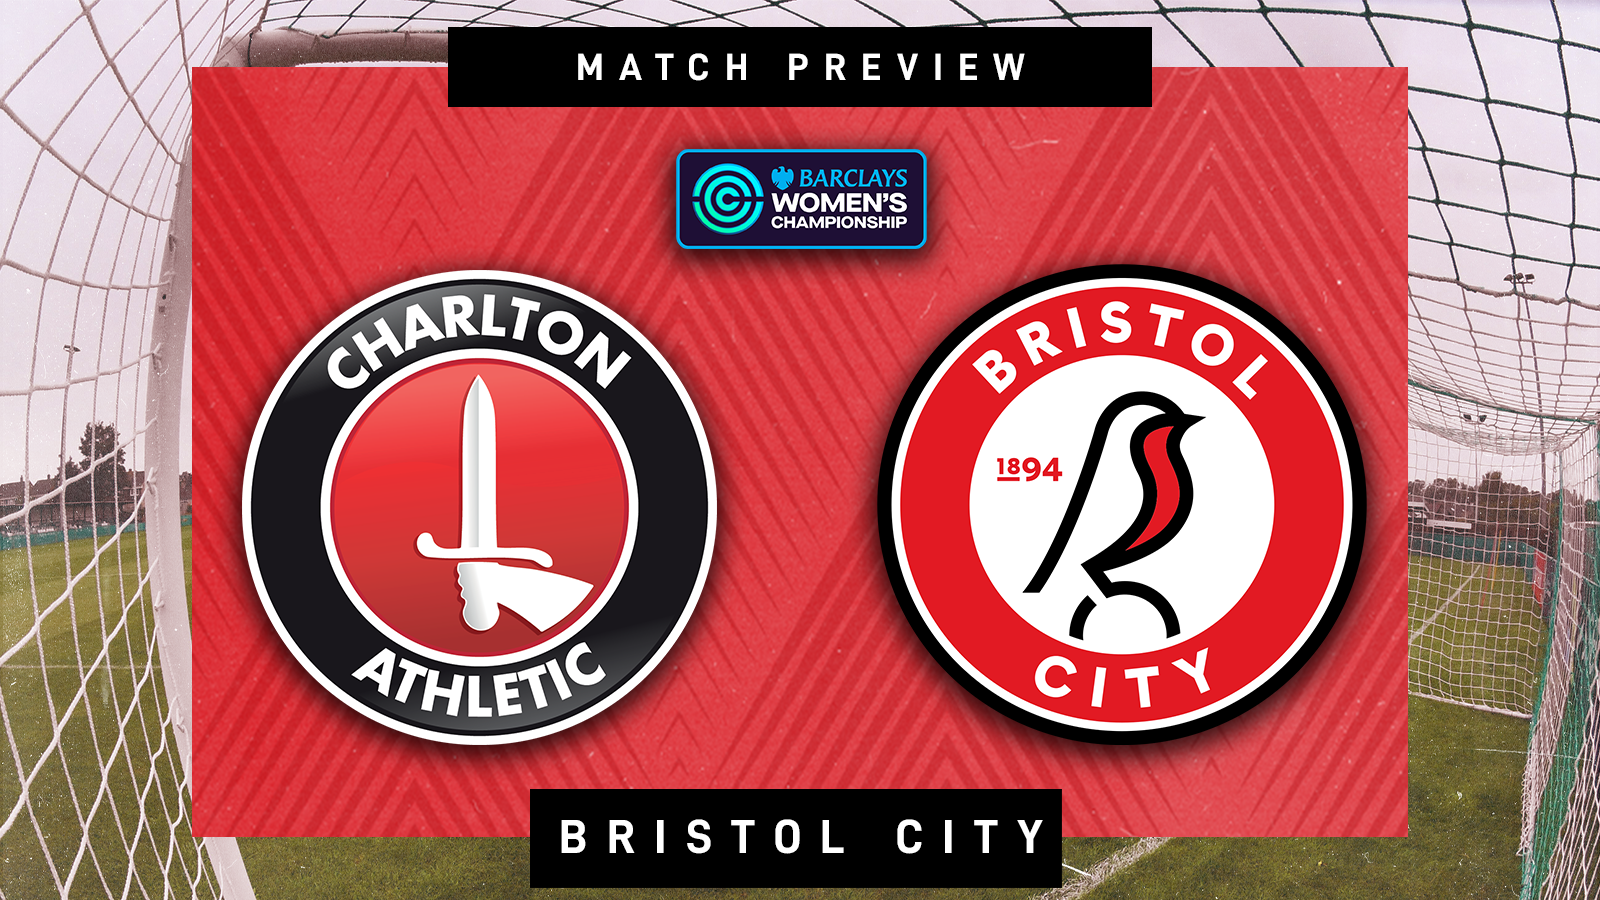 Match Preview | Charlton v Bristol City 